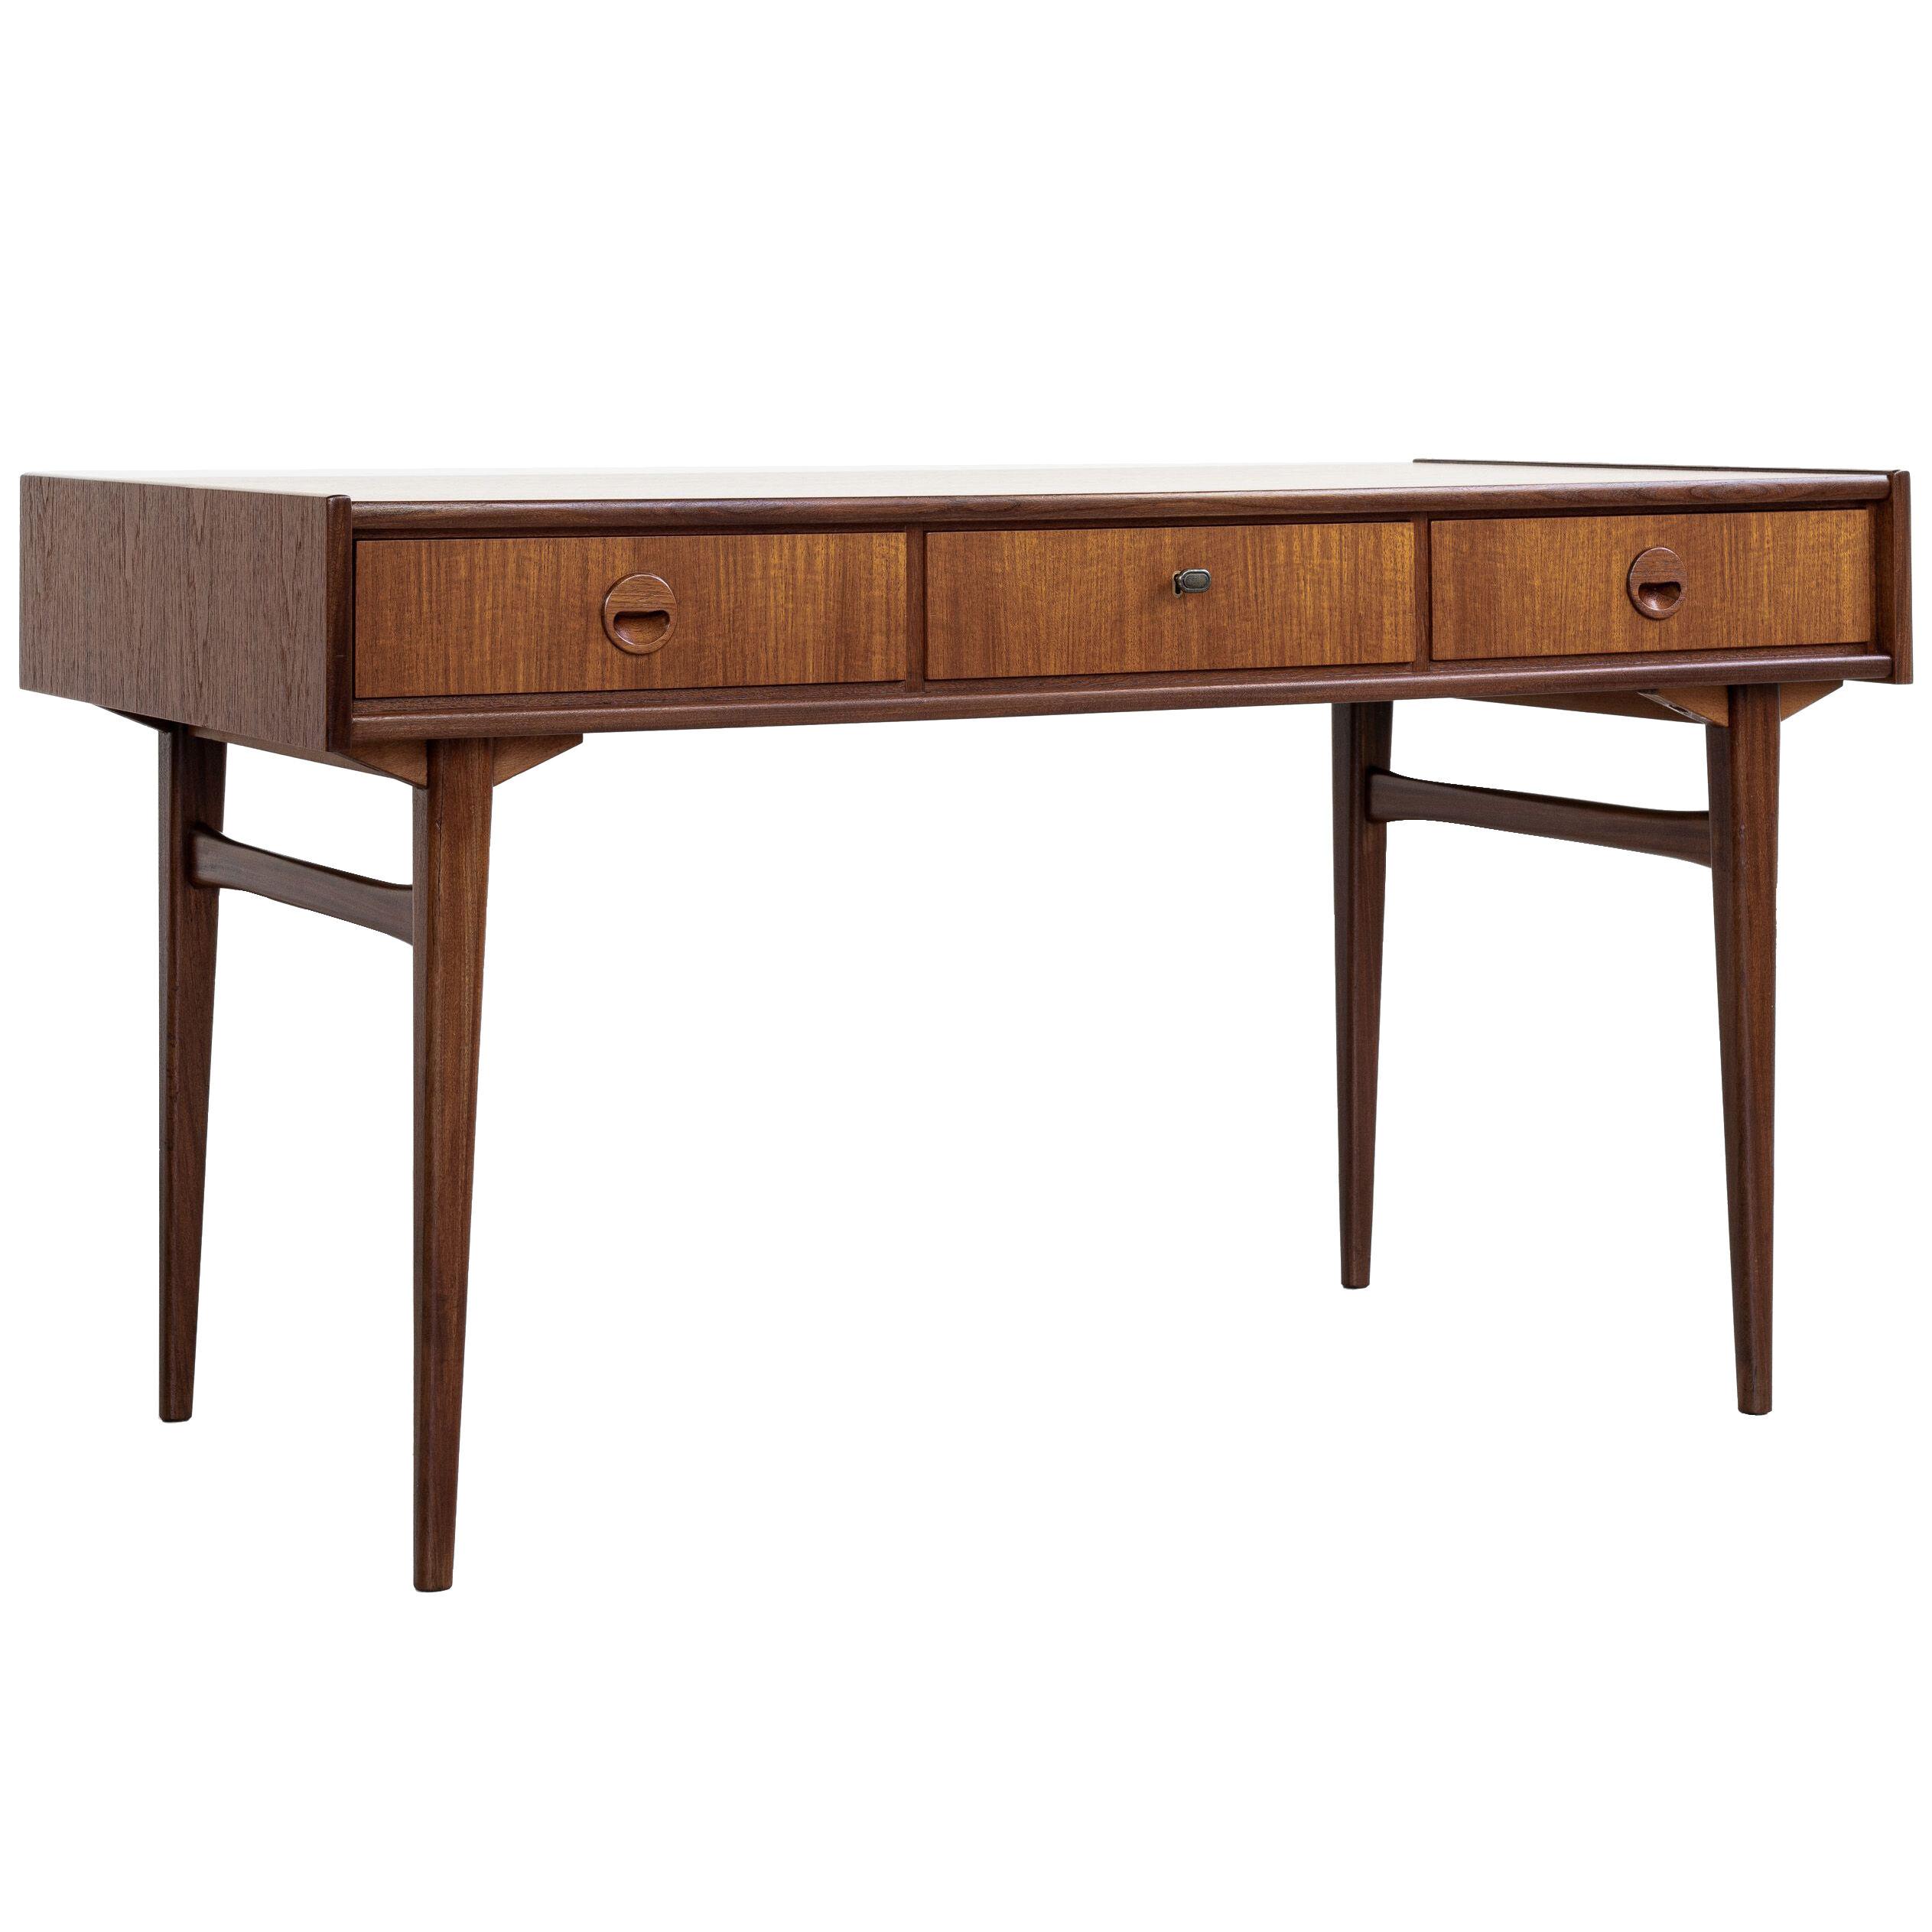 Midcentury desk in teak by Bartels Werke 1960s